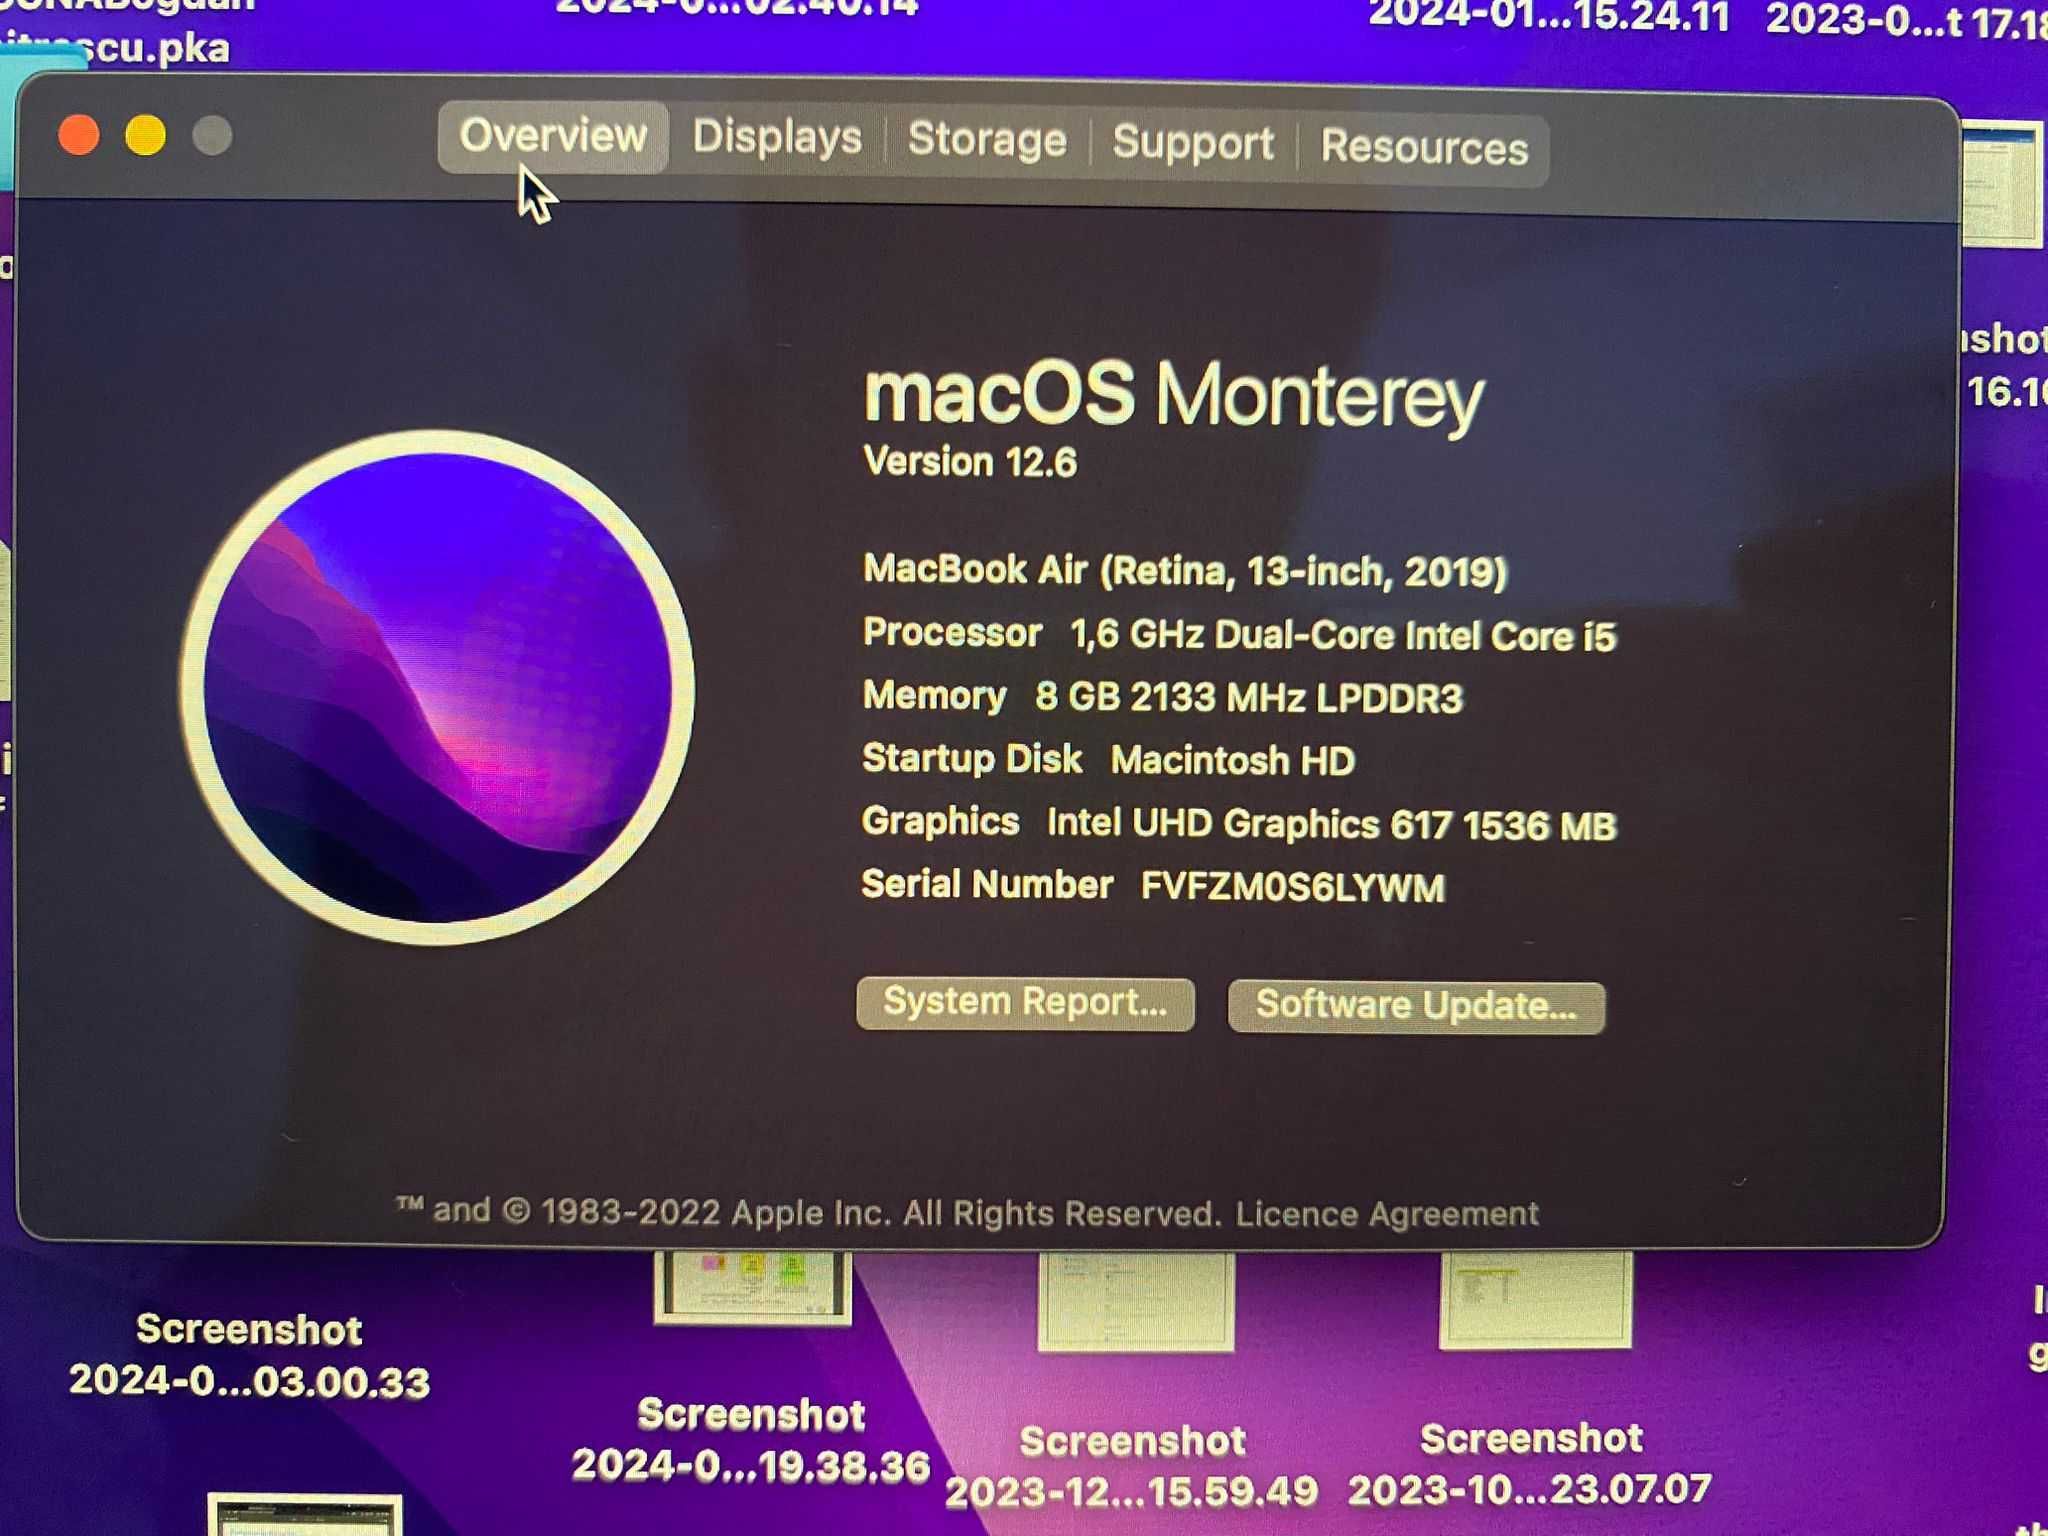 Macbook Air 2019 Rose Gold Intel i5 8gb RAM 256gb ssd